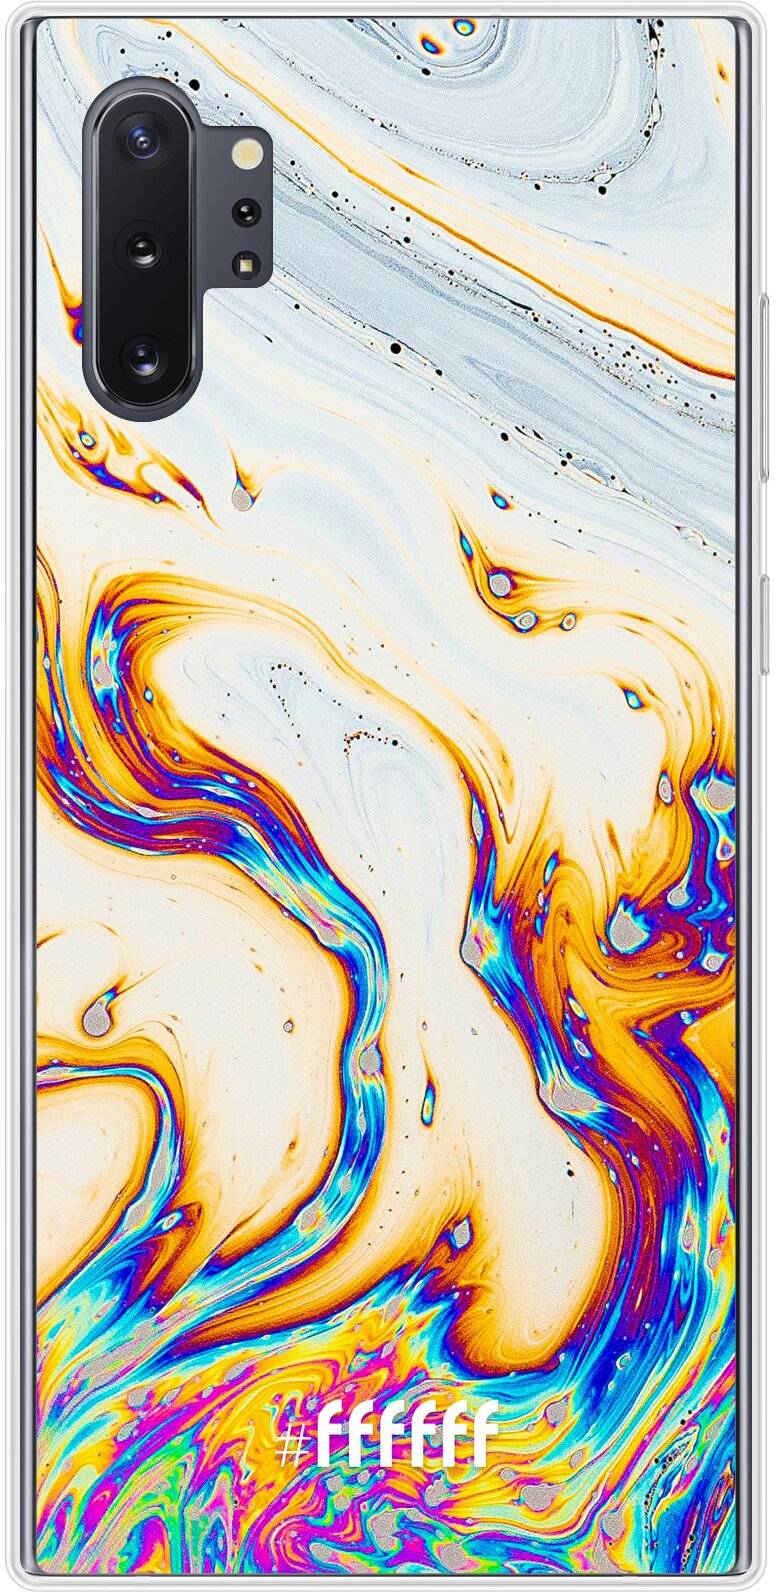 Bubble Texture Galaxy Note 10 Plus